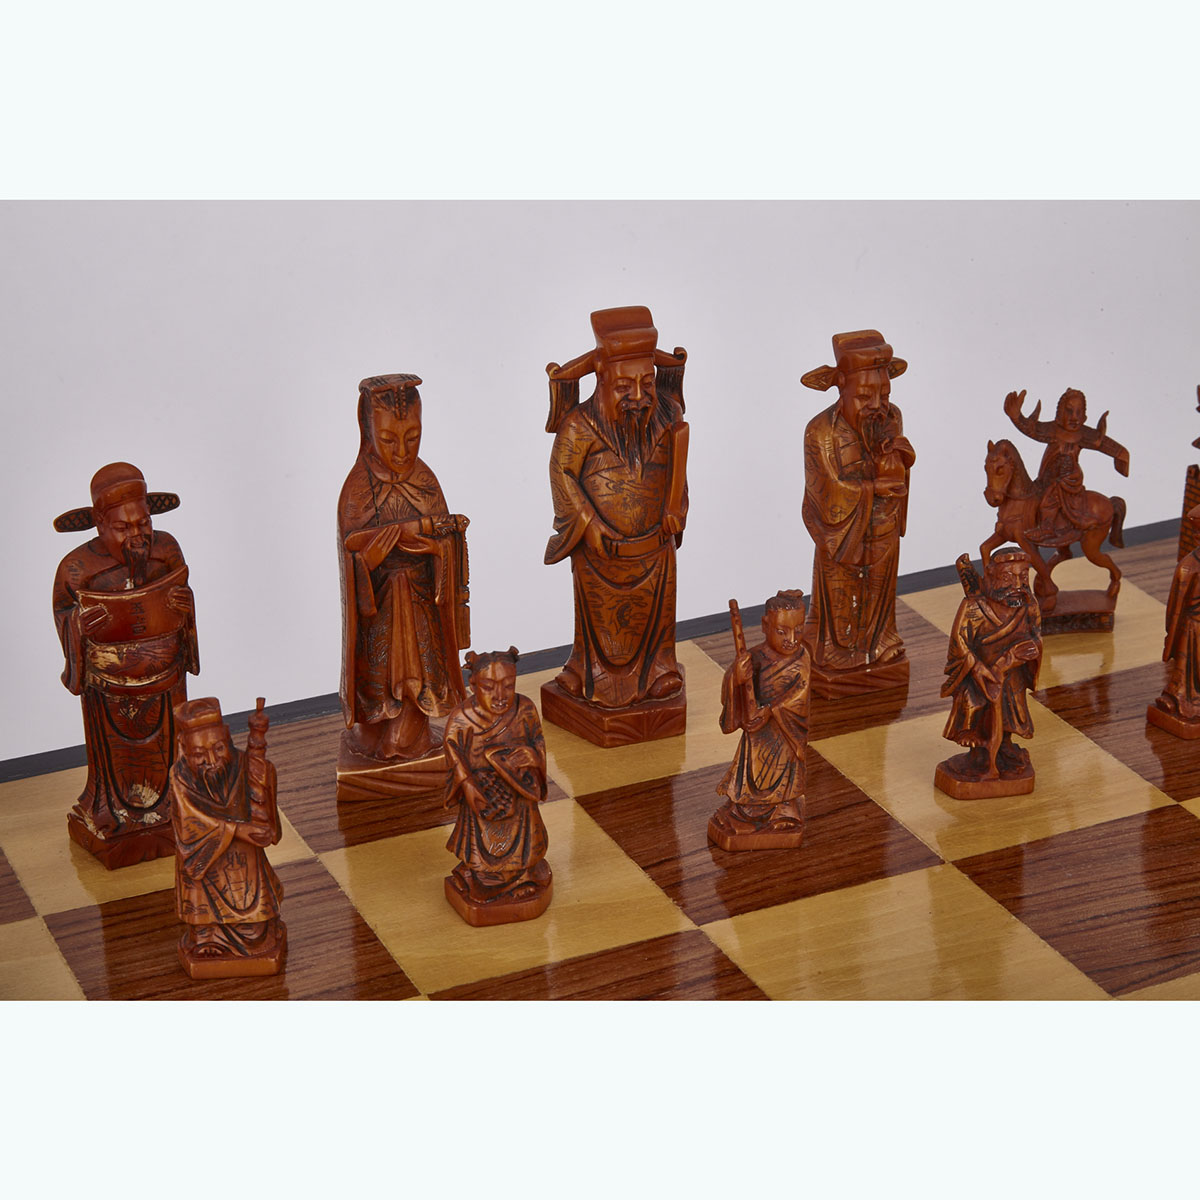 Large Export Ivory Chess Set, Circa 1940’s